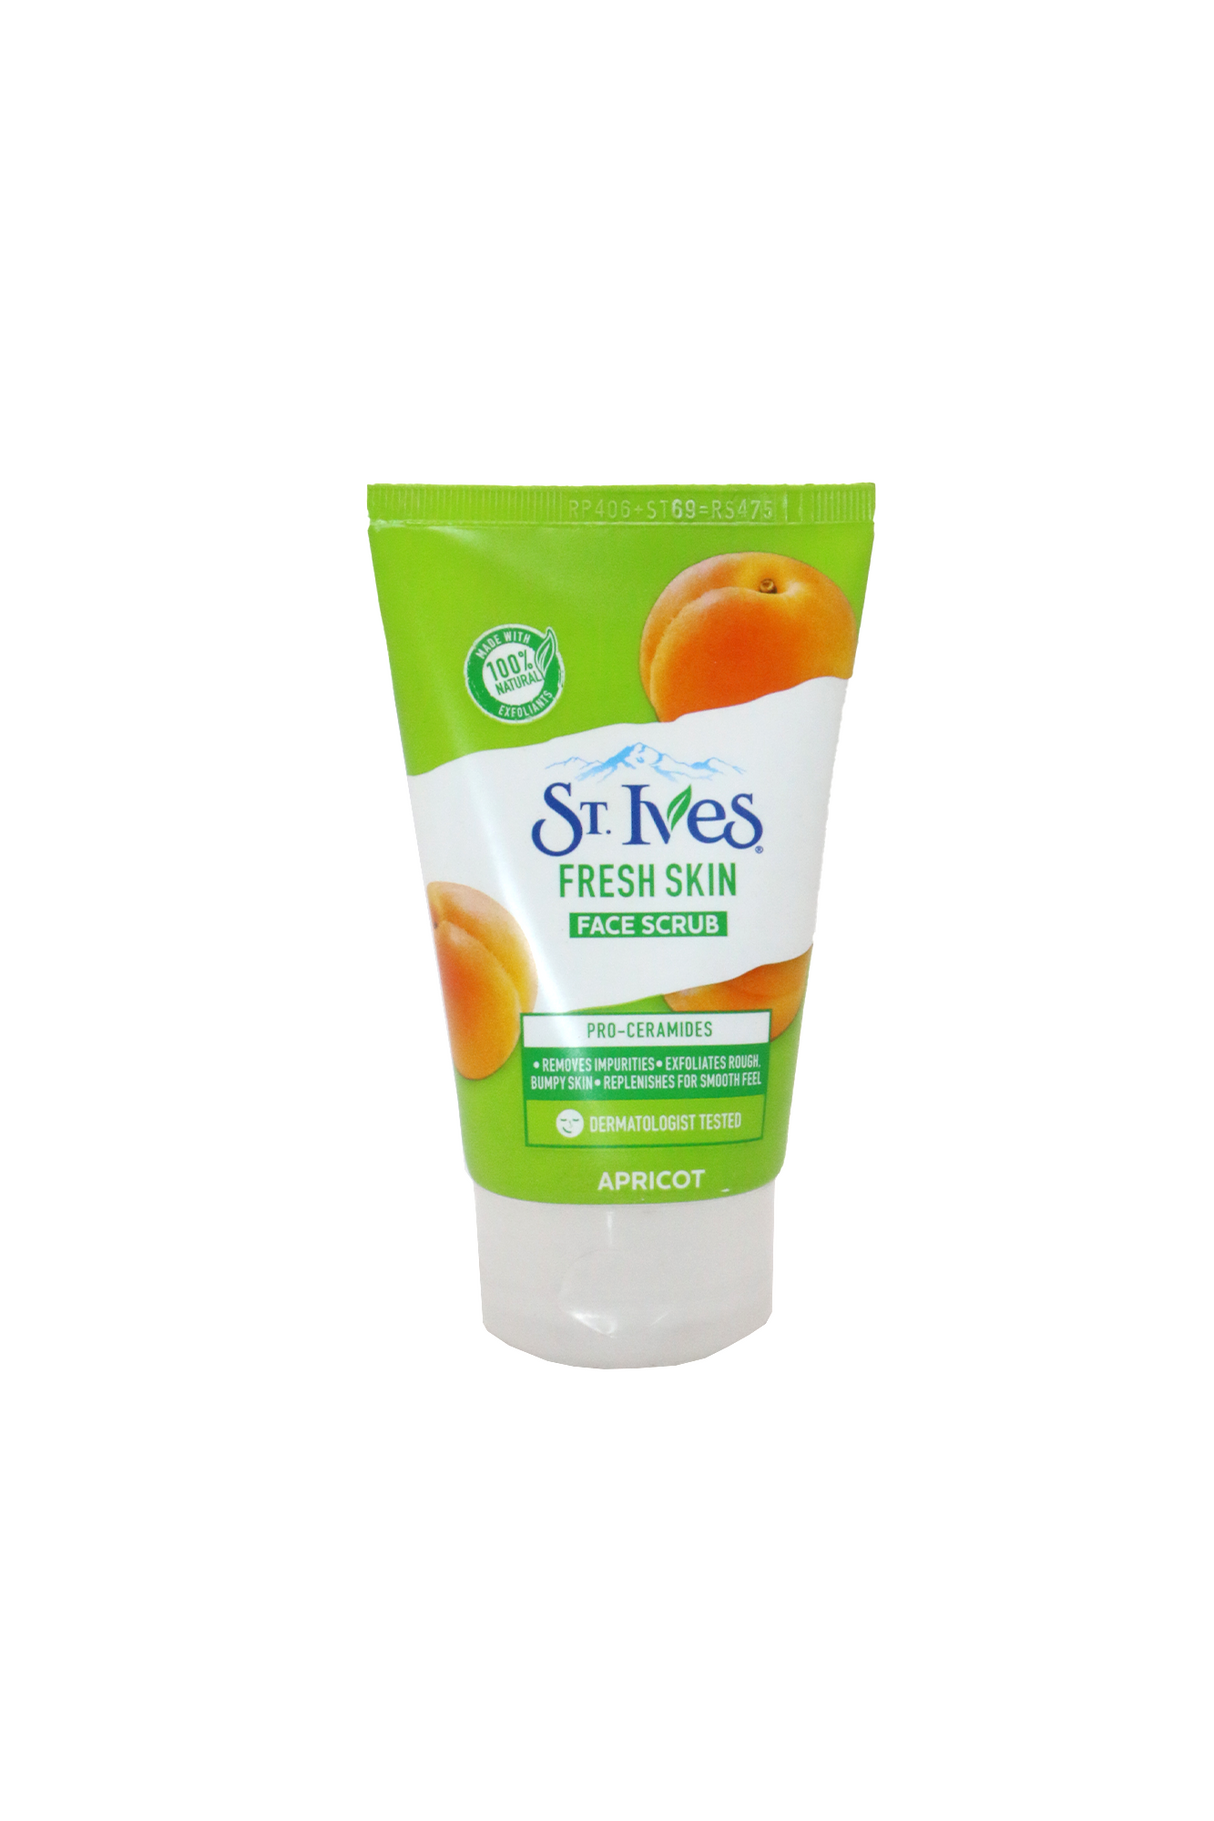 stives face scrub fresh skin apricot 100g